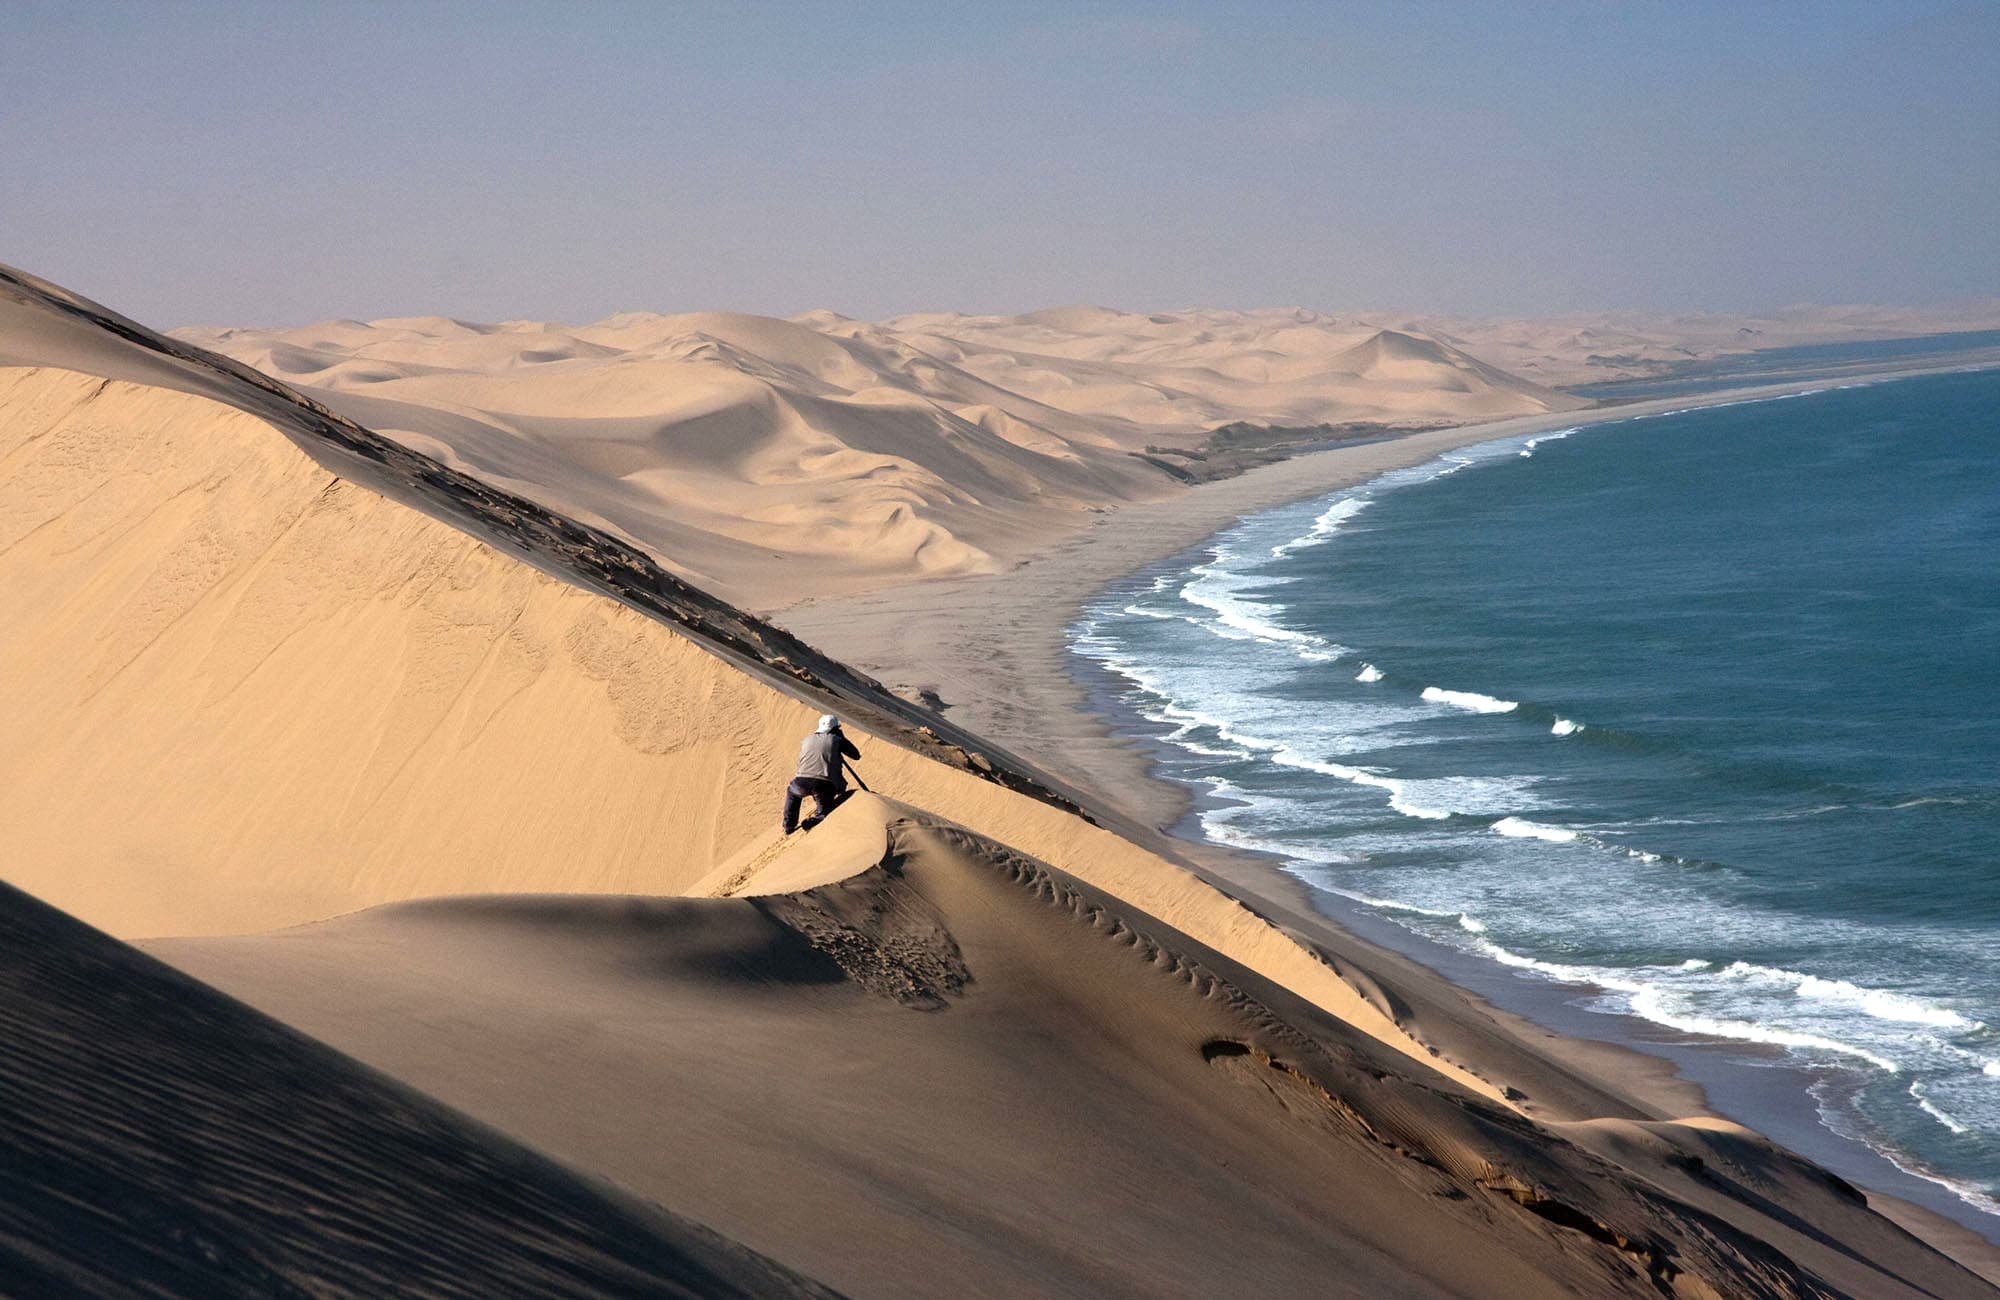 Dune and ocean view